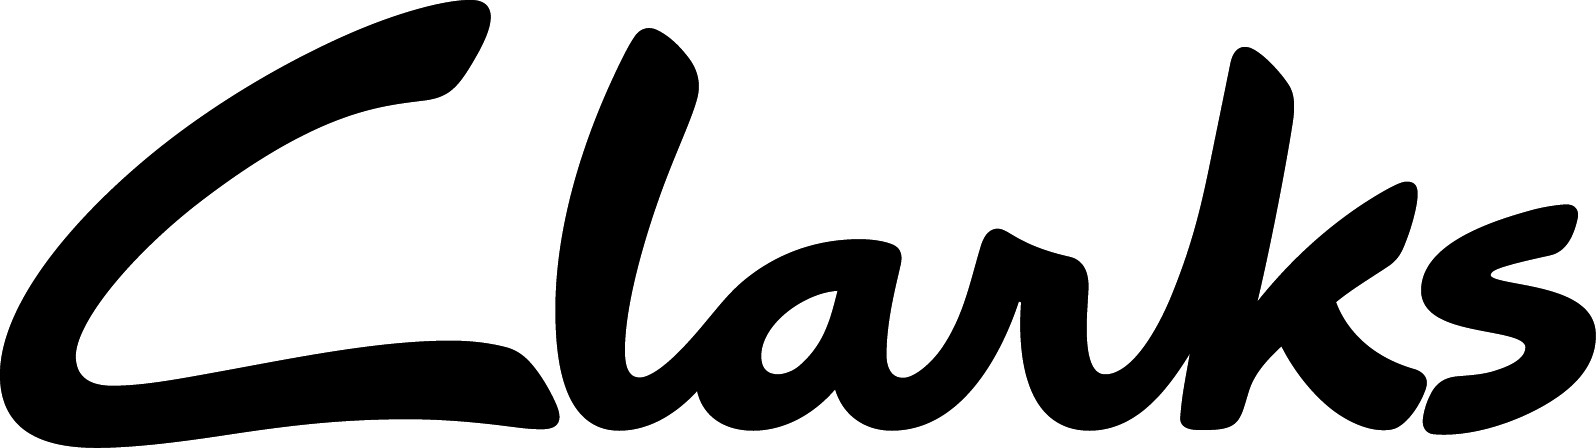 Clarks-logo-small-BLACK-.jpg